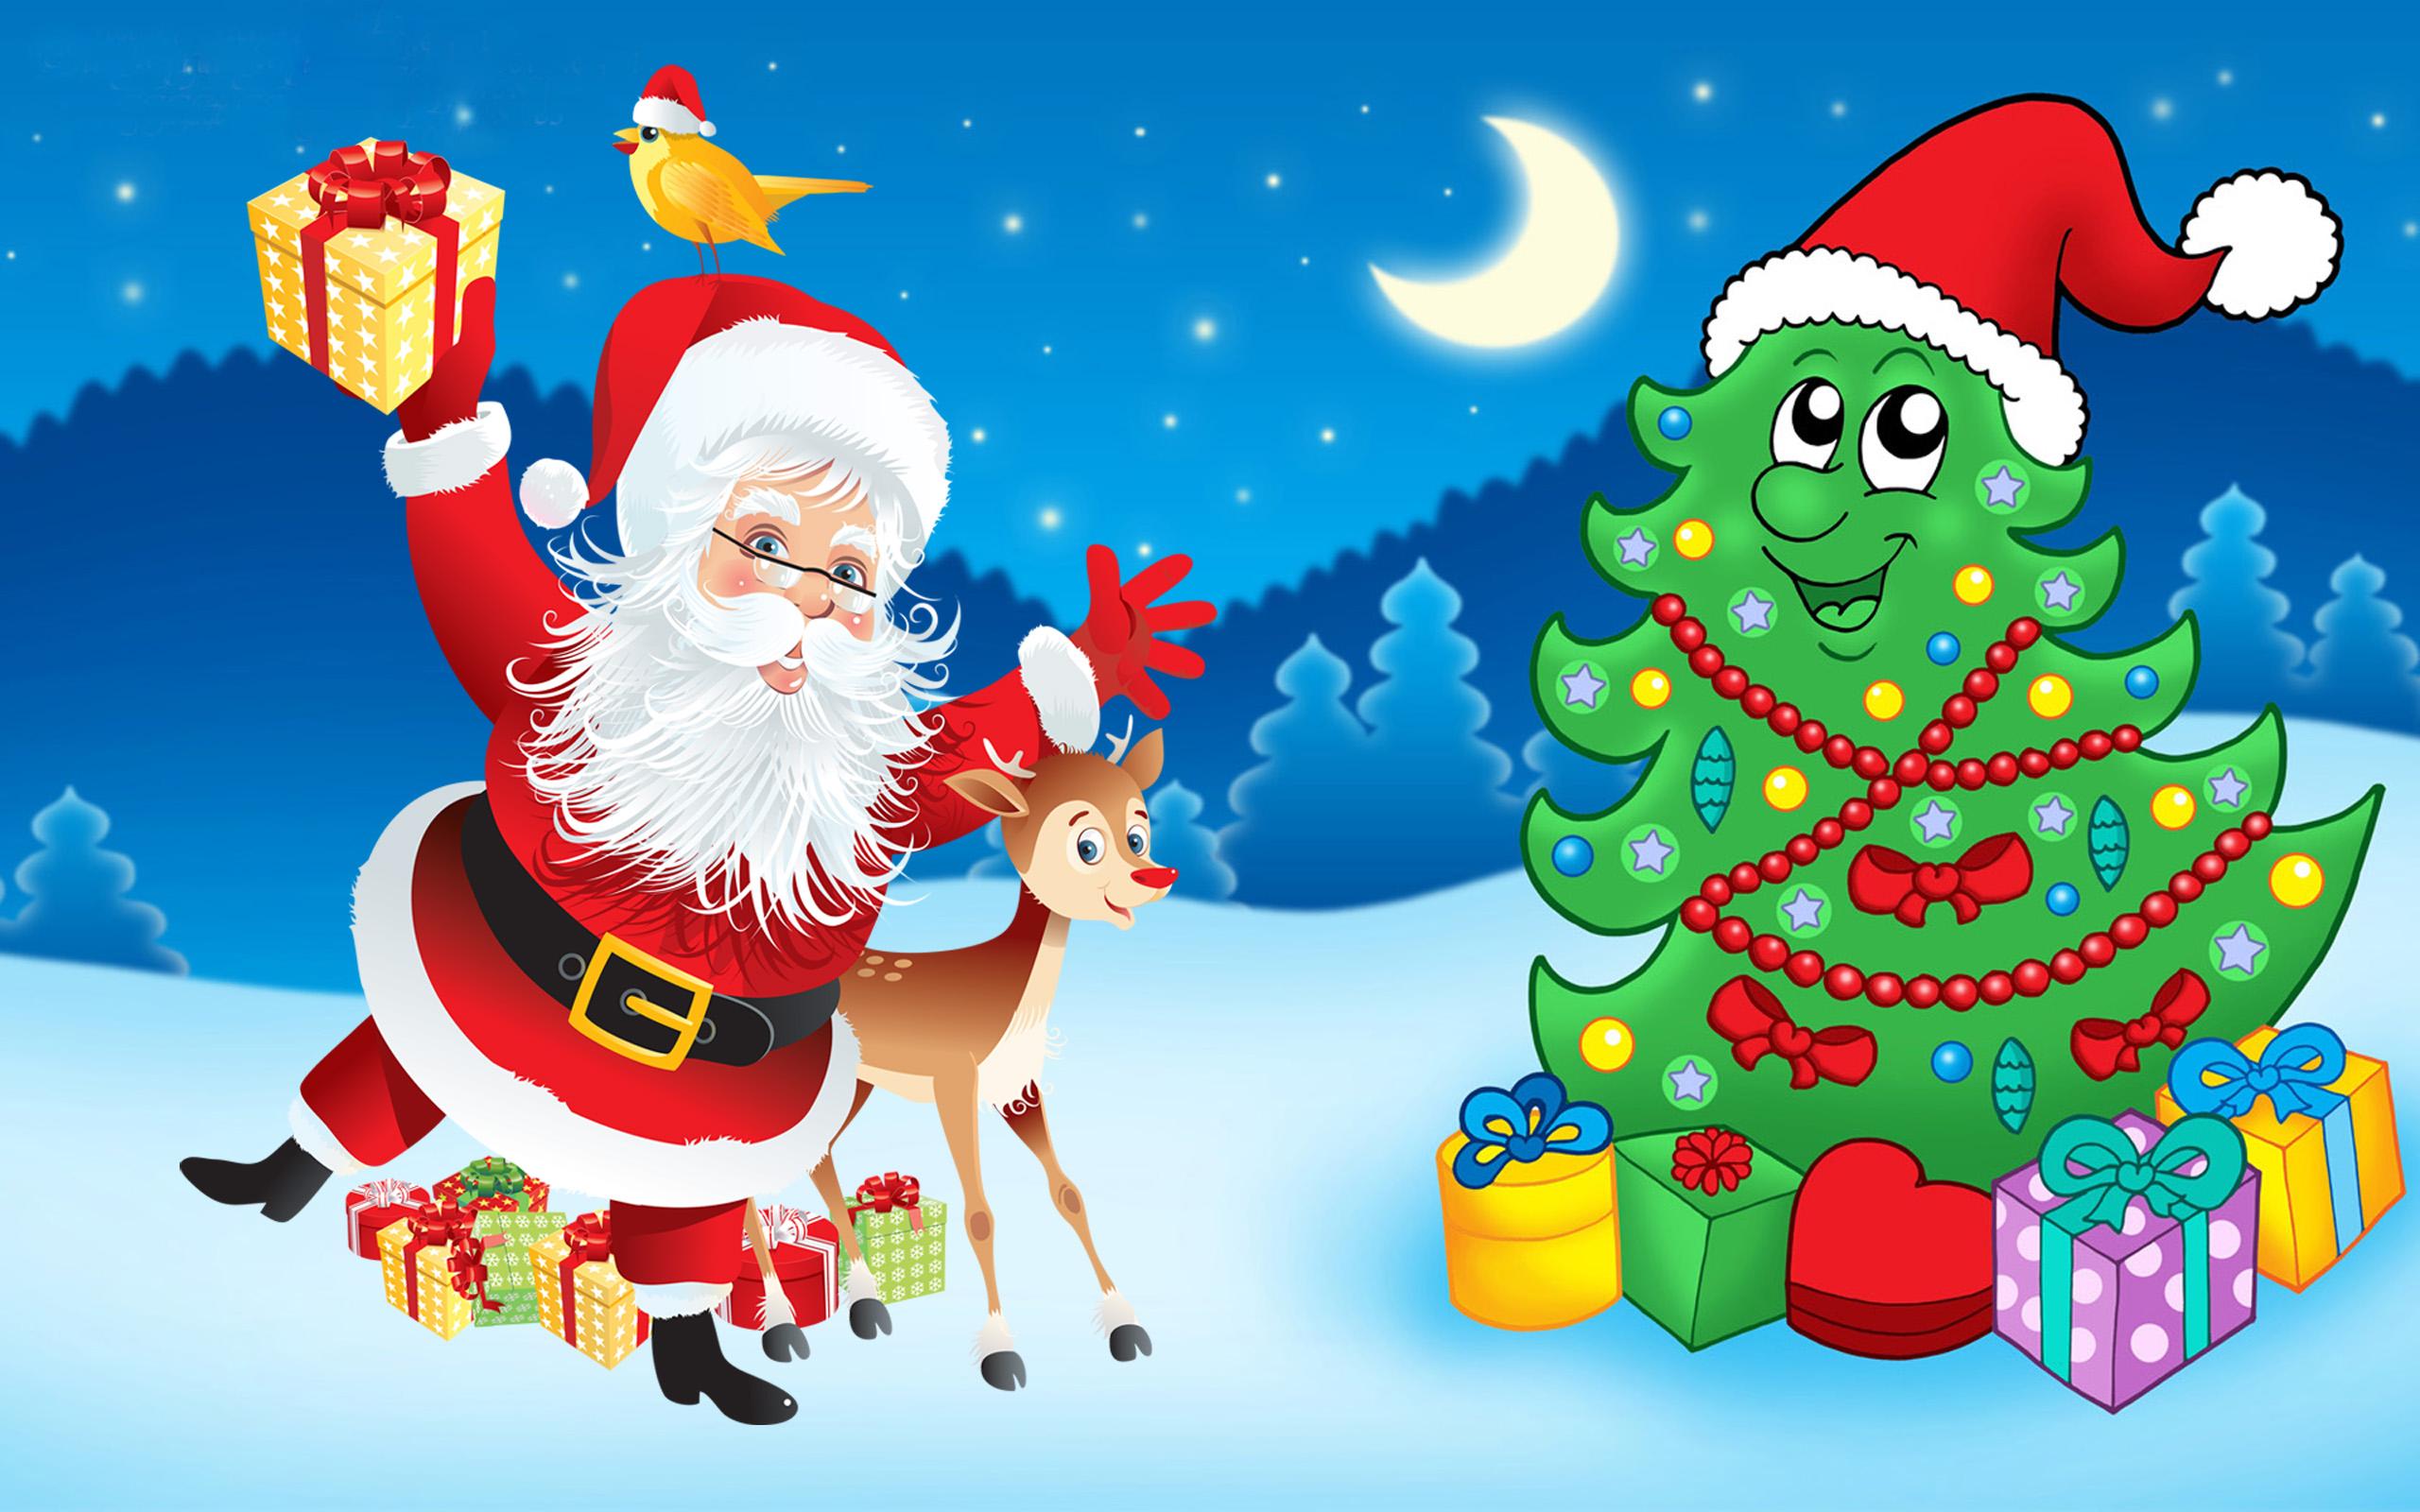 Santa Claus Christmas Tree Decorations Gifts Cartoon